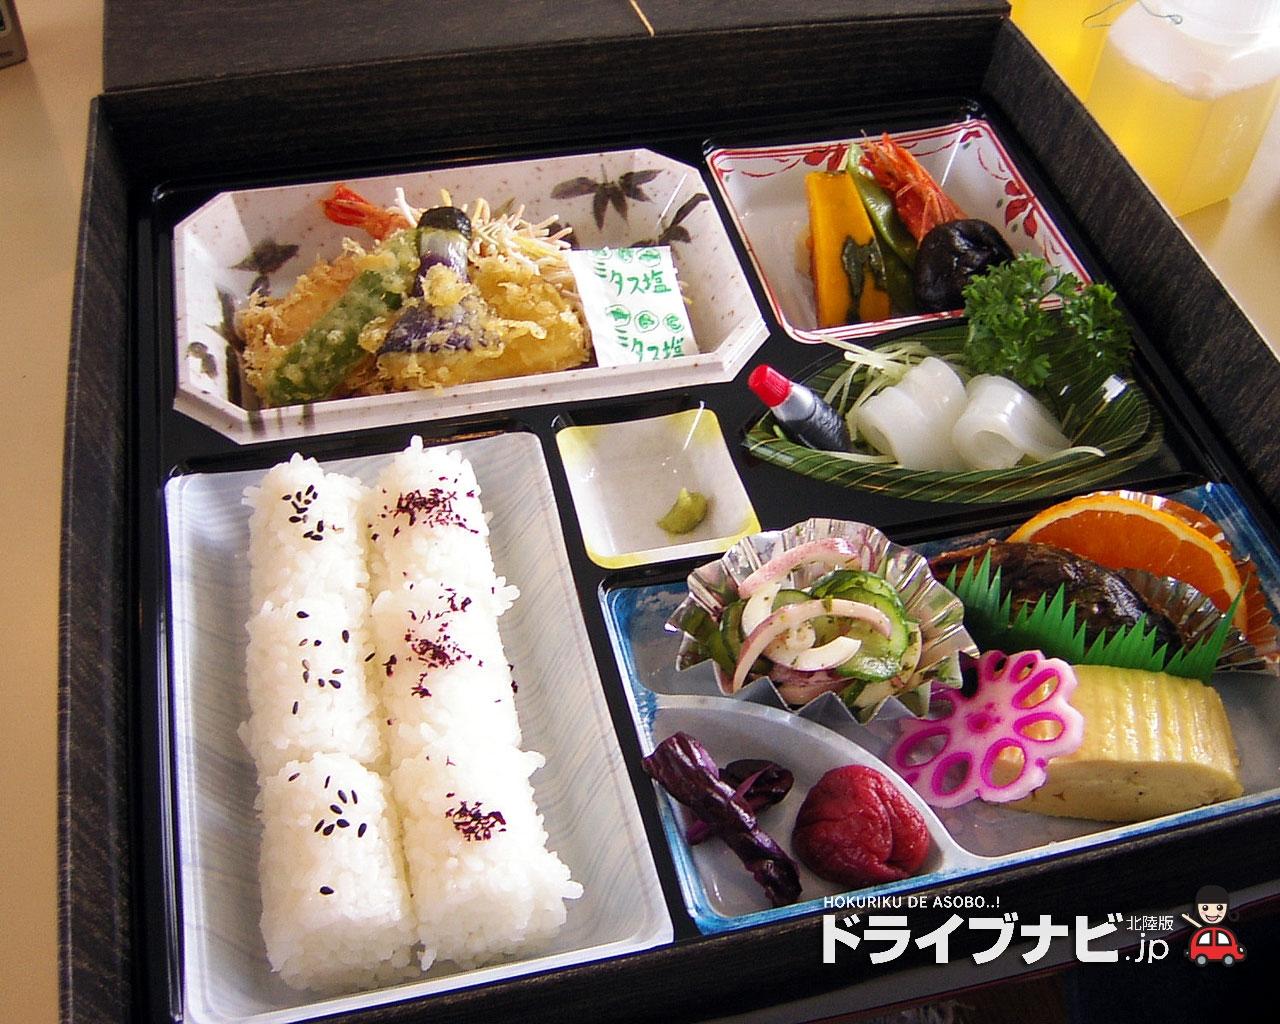 Marisco Sushi comida Alimentos